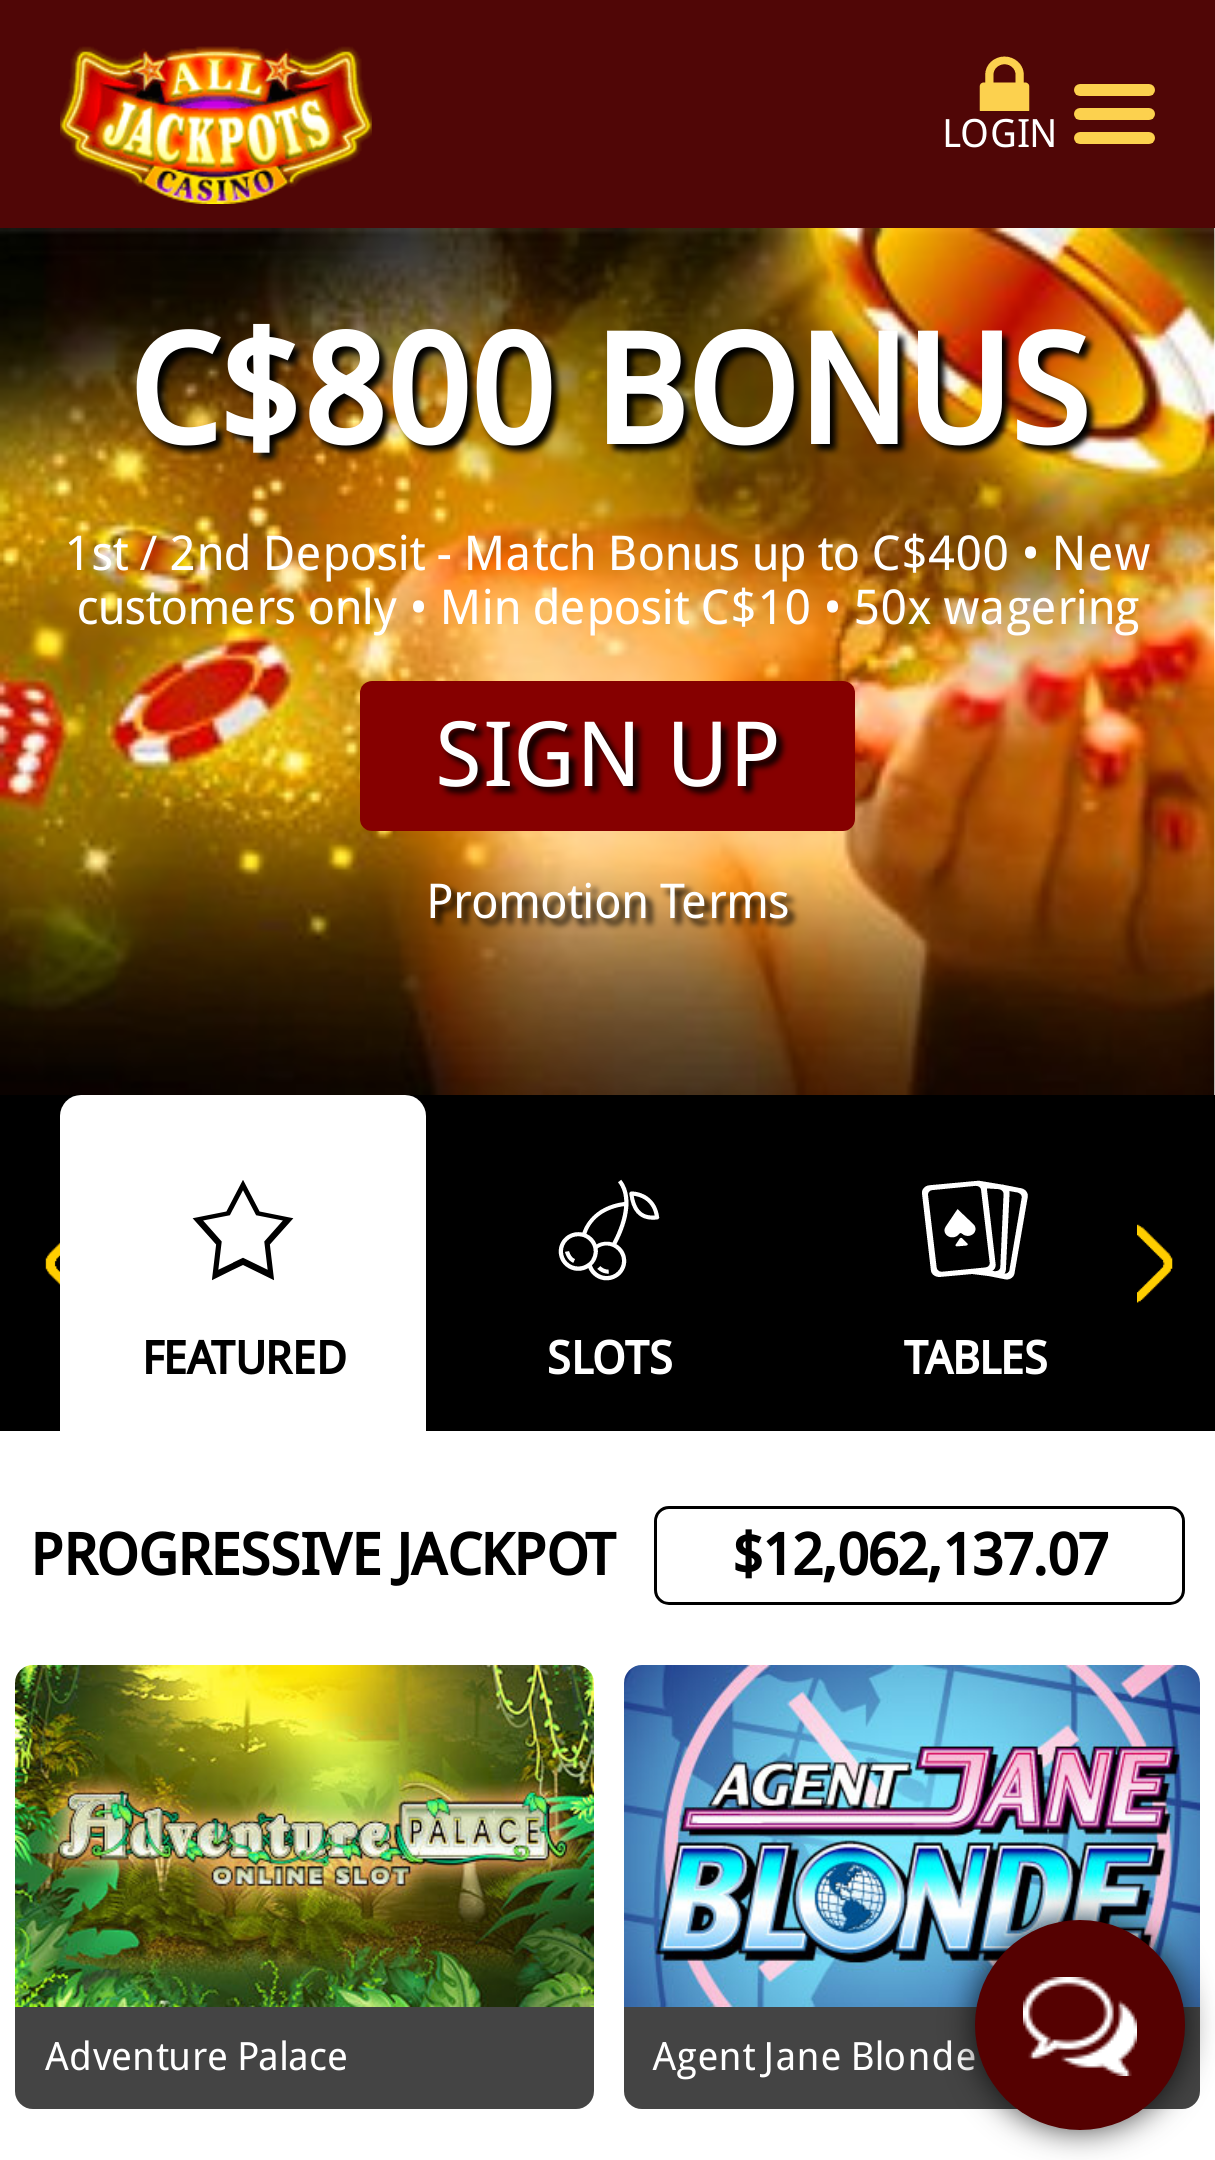 riversweeps online casino app login